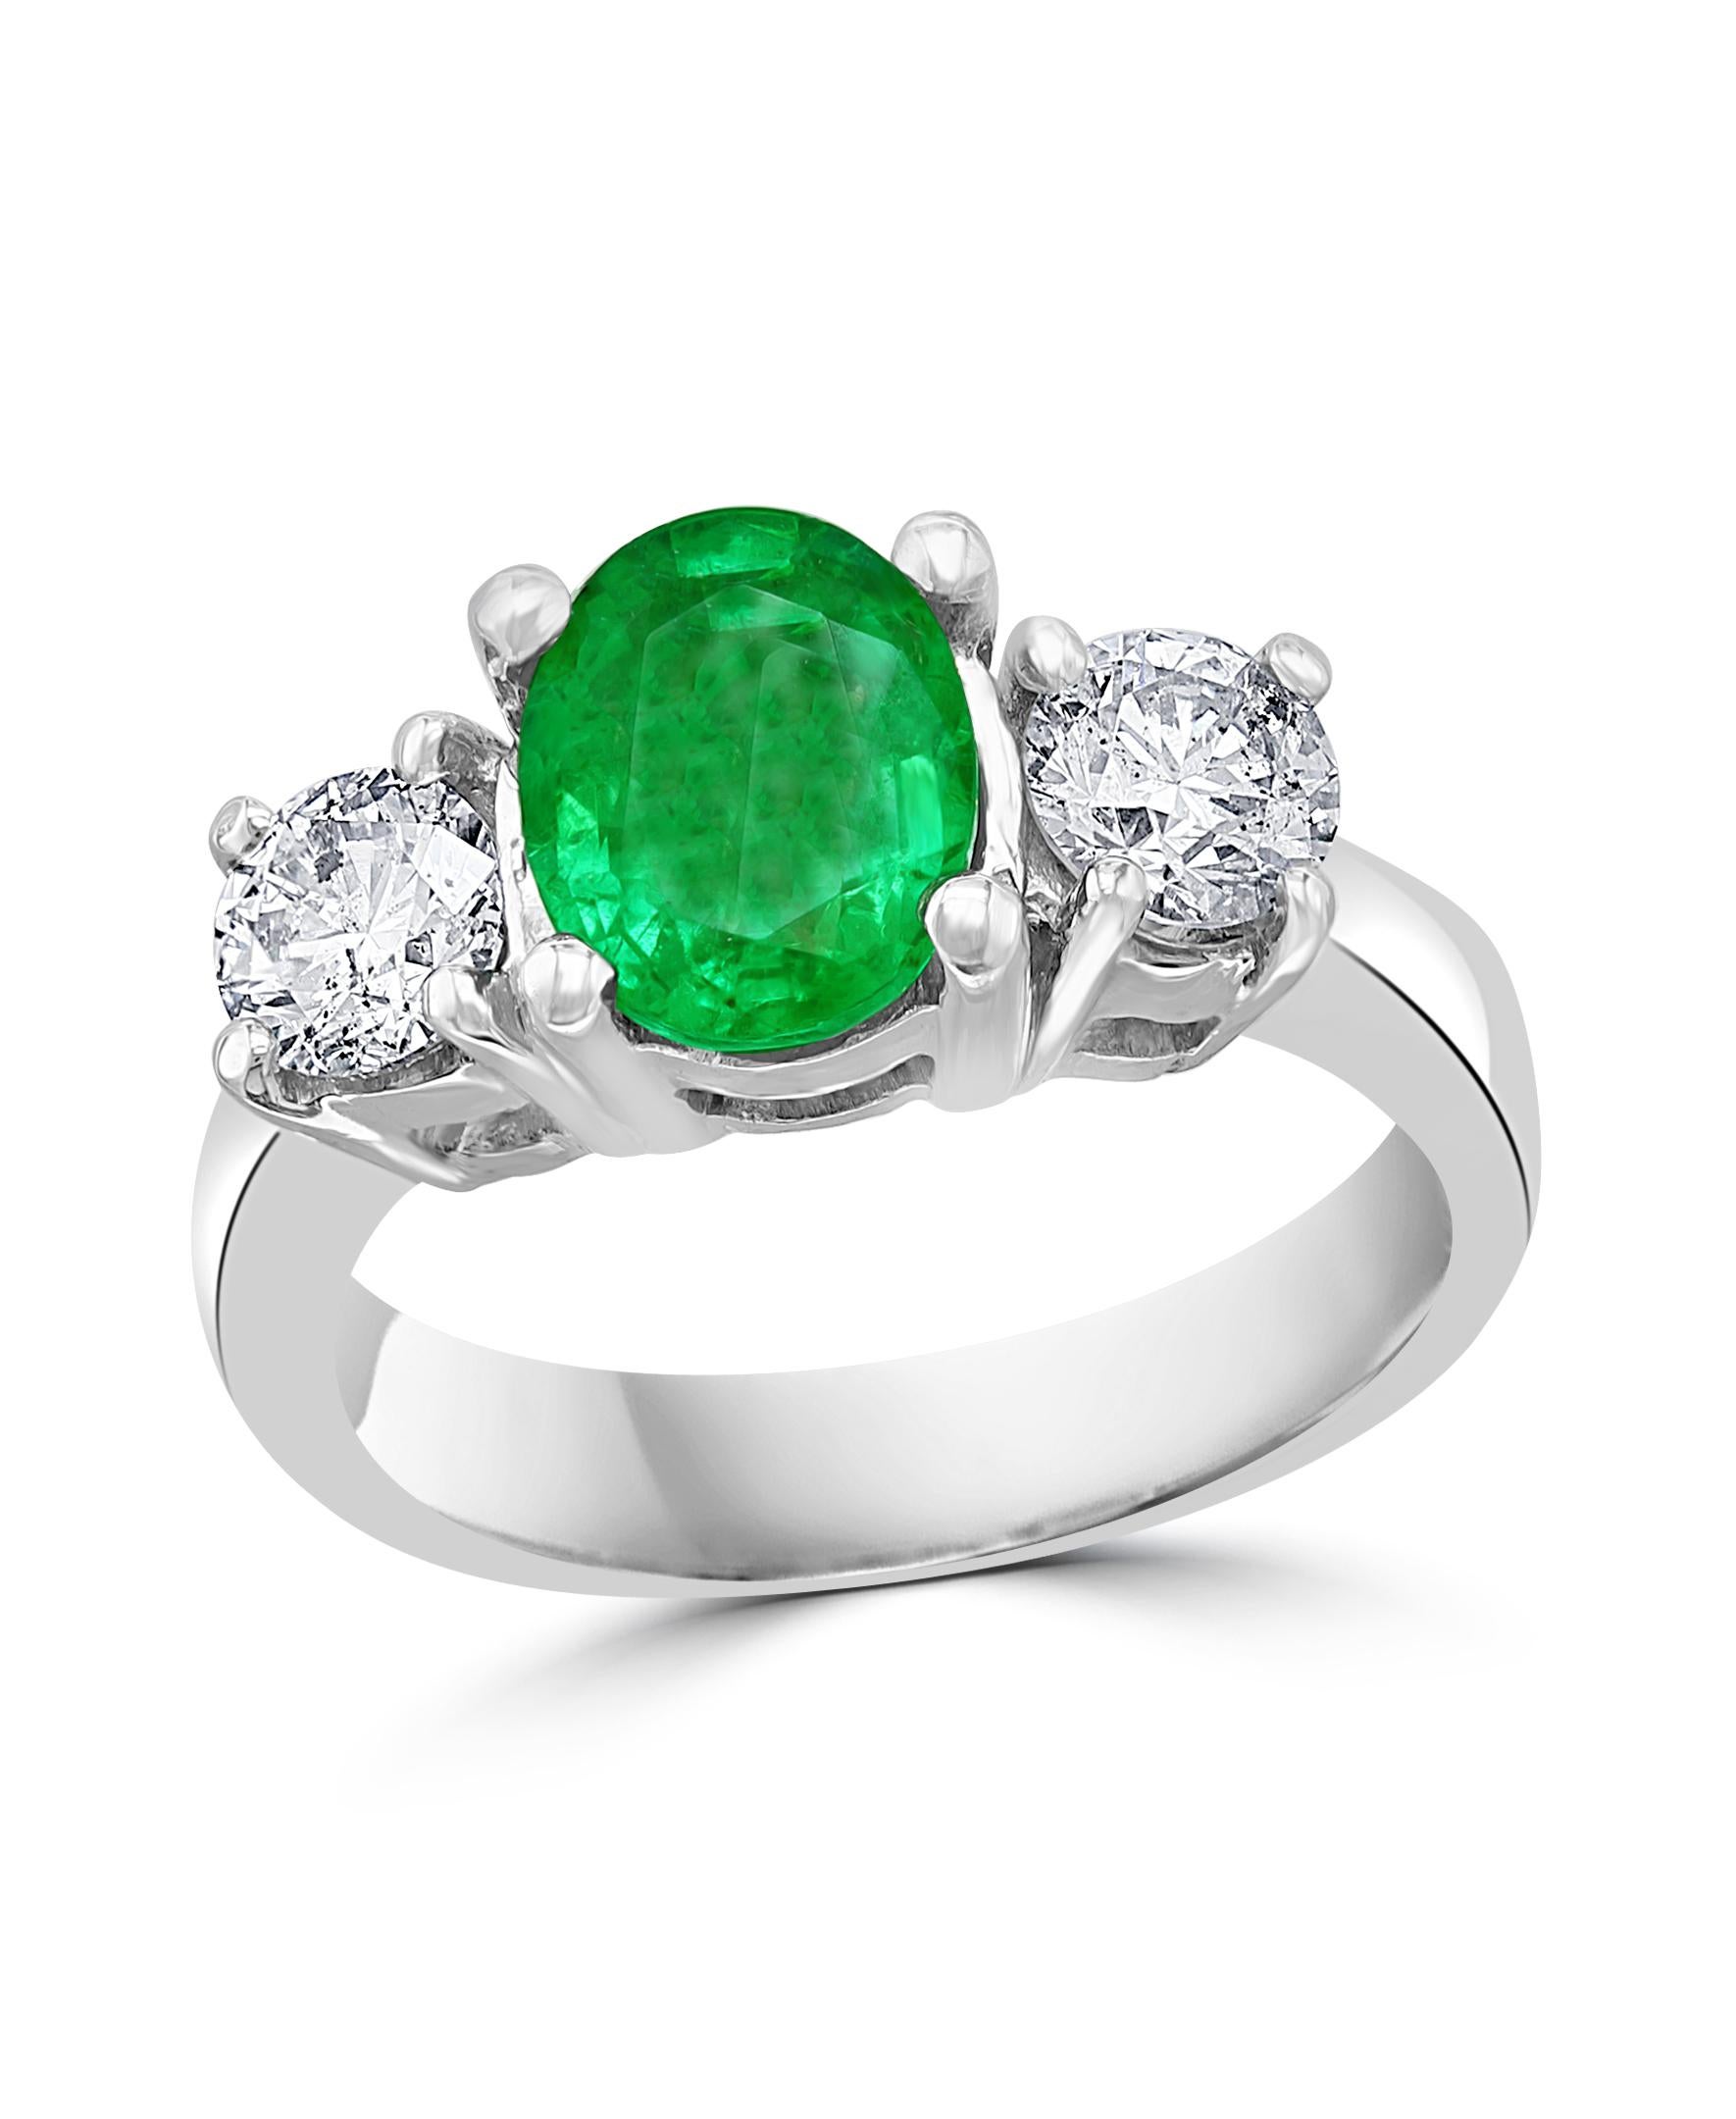 1.8 Carat Oval Cut Emerald & 0.90 Ct Diamond Ring in Platinum 5